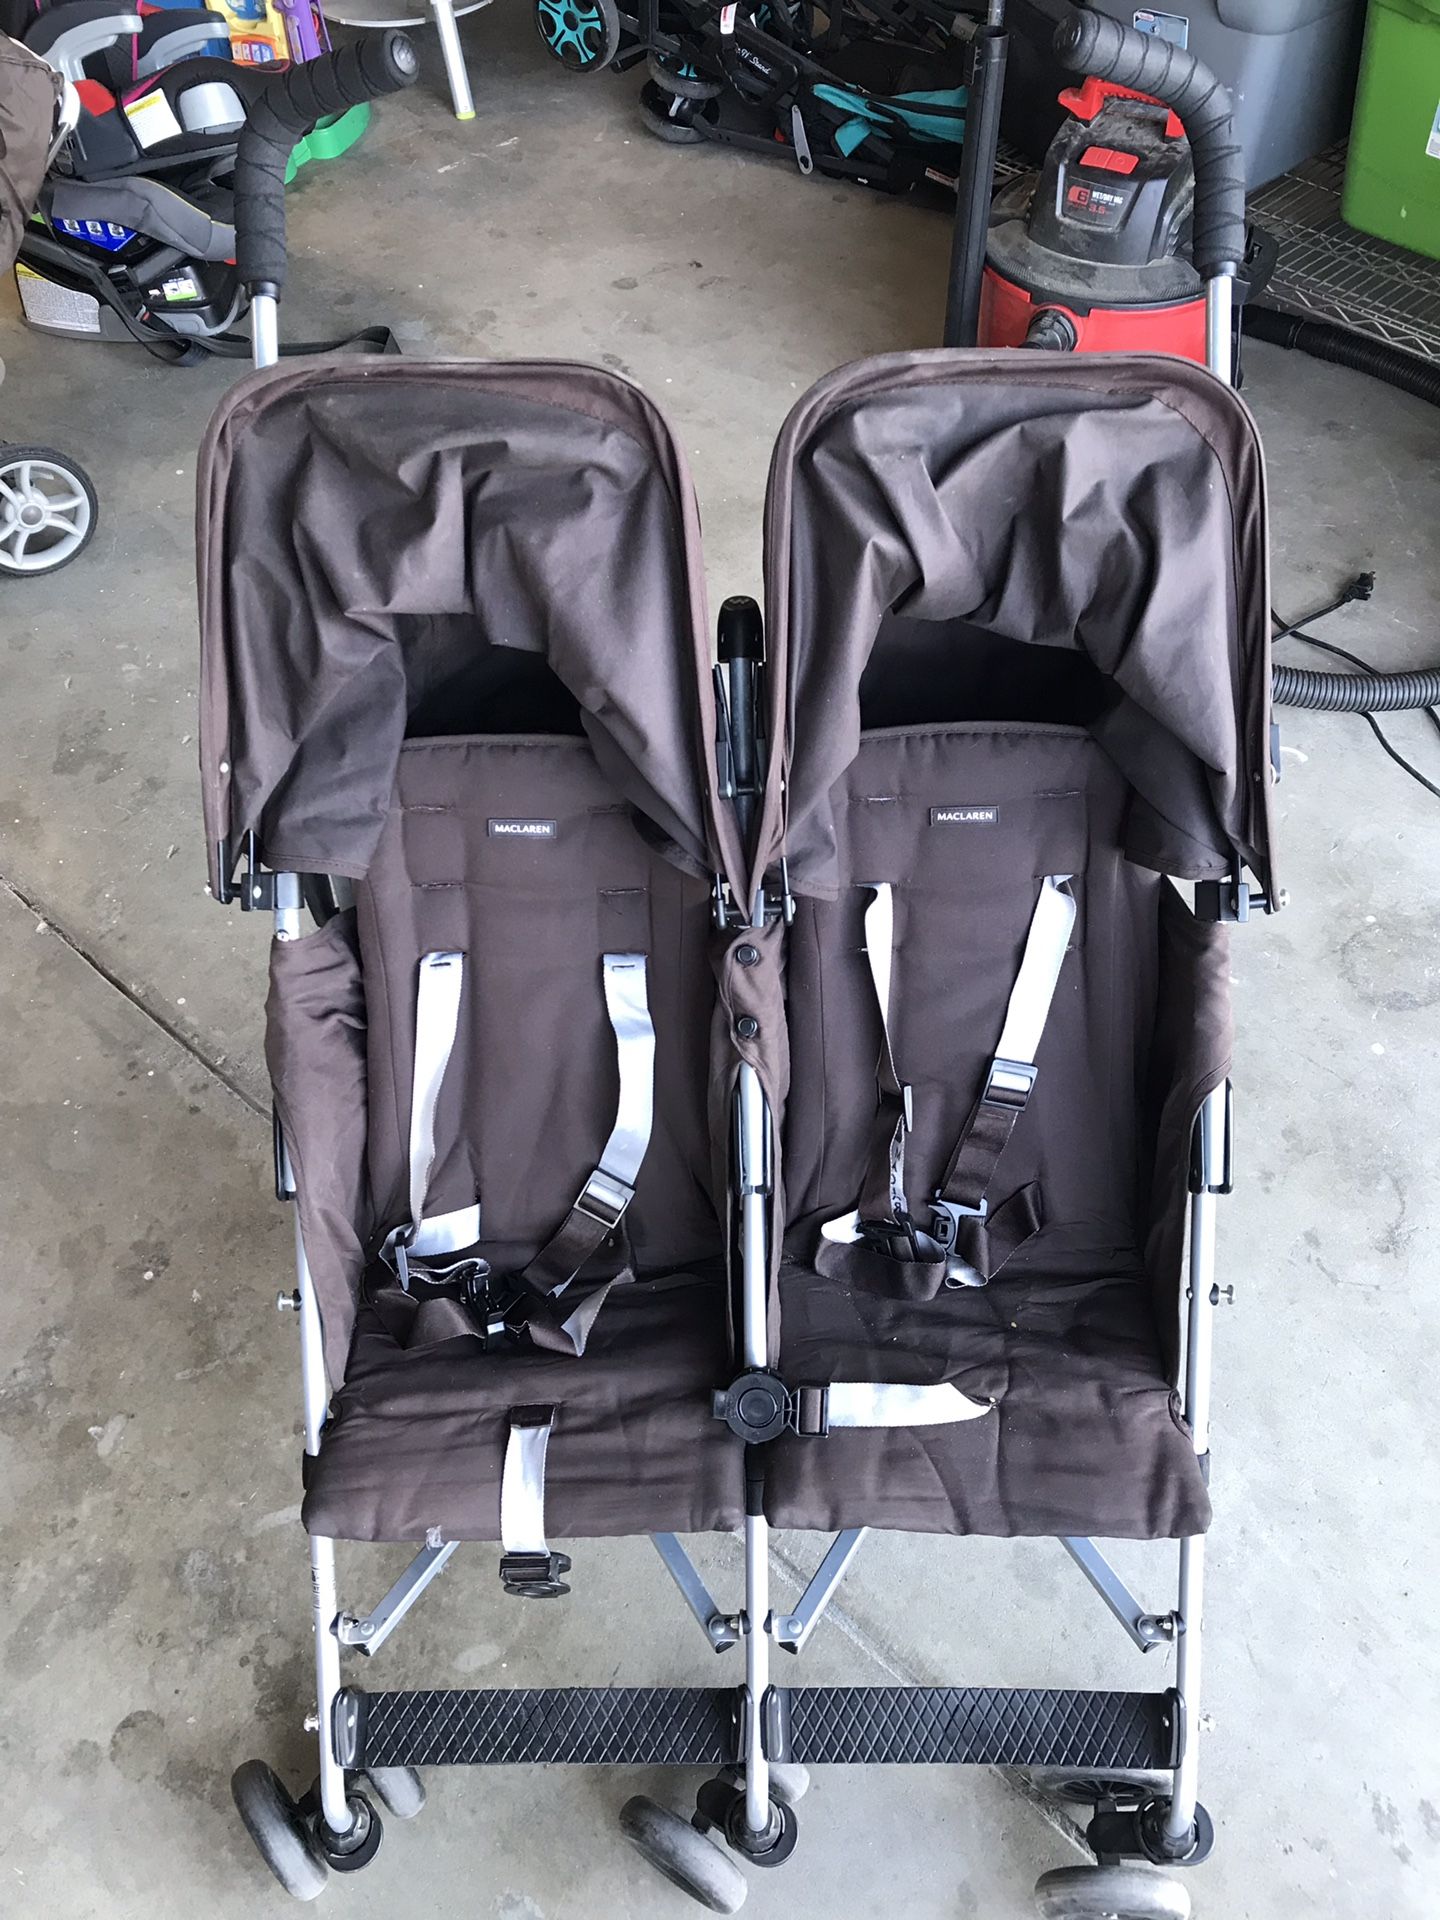 Baby stroller (side by side)